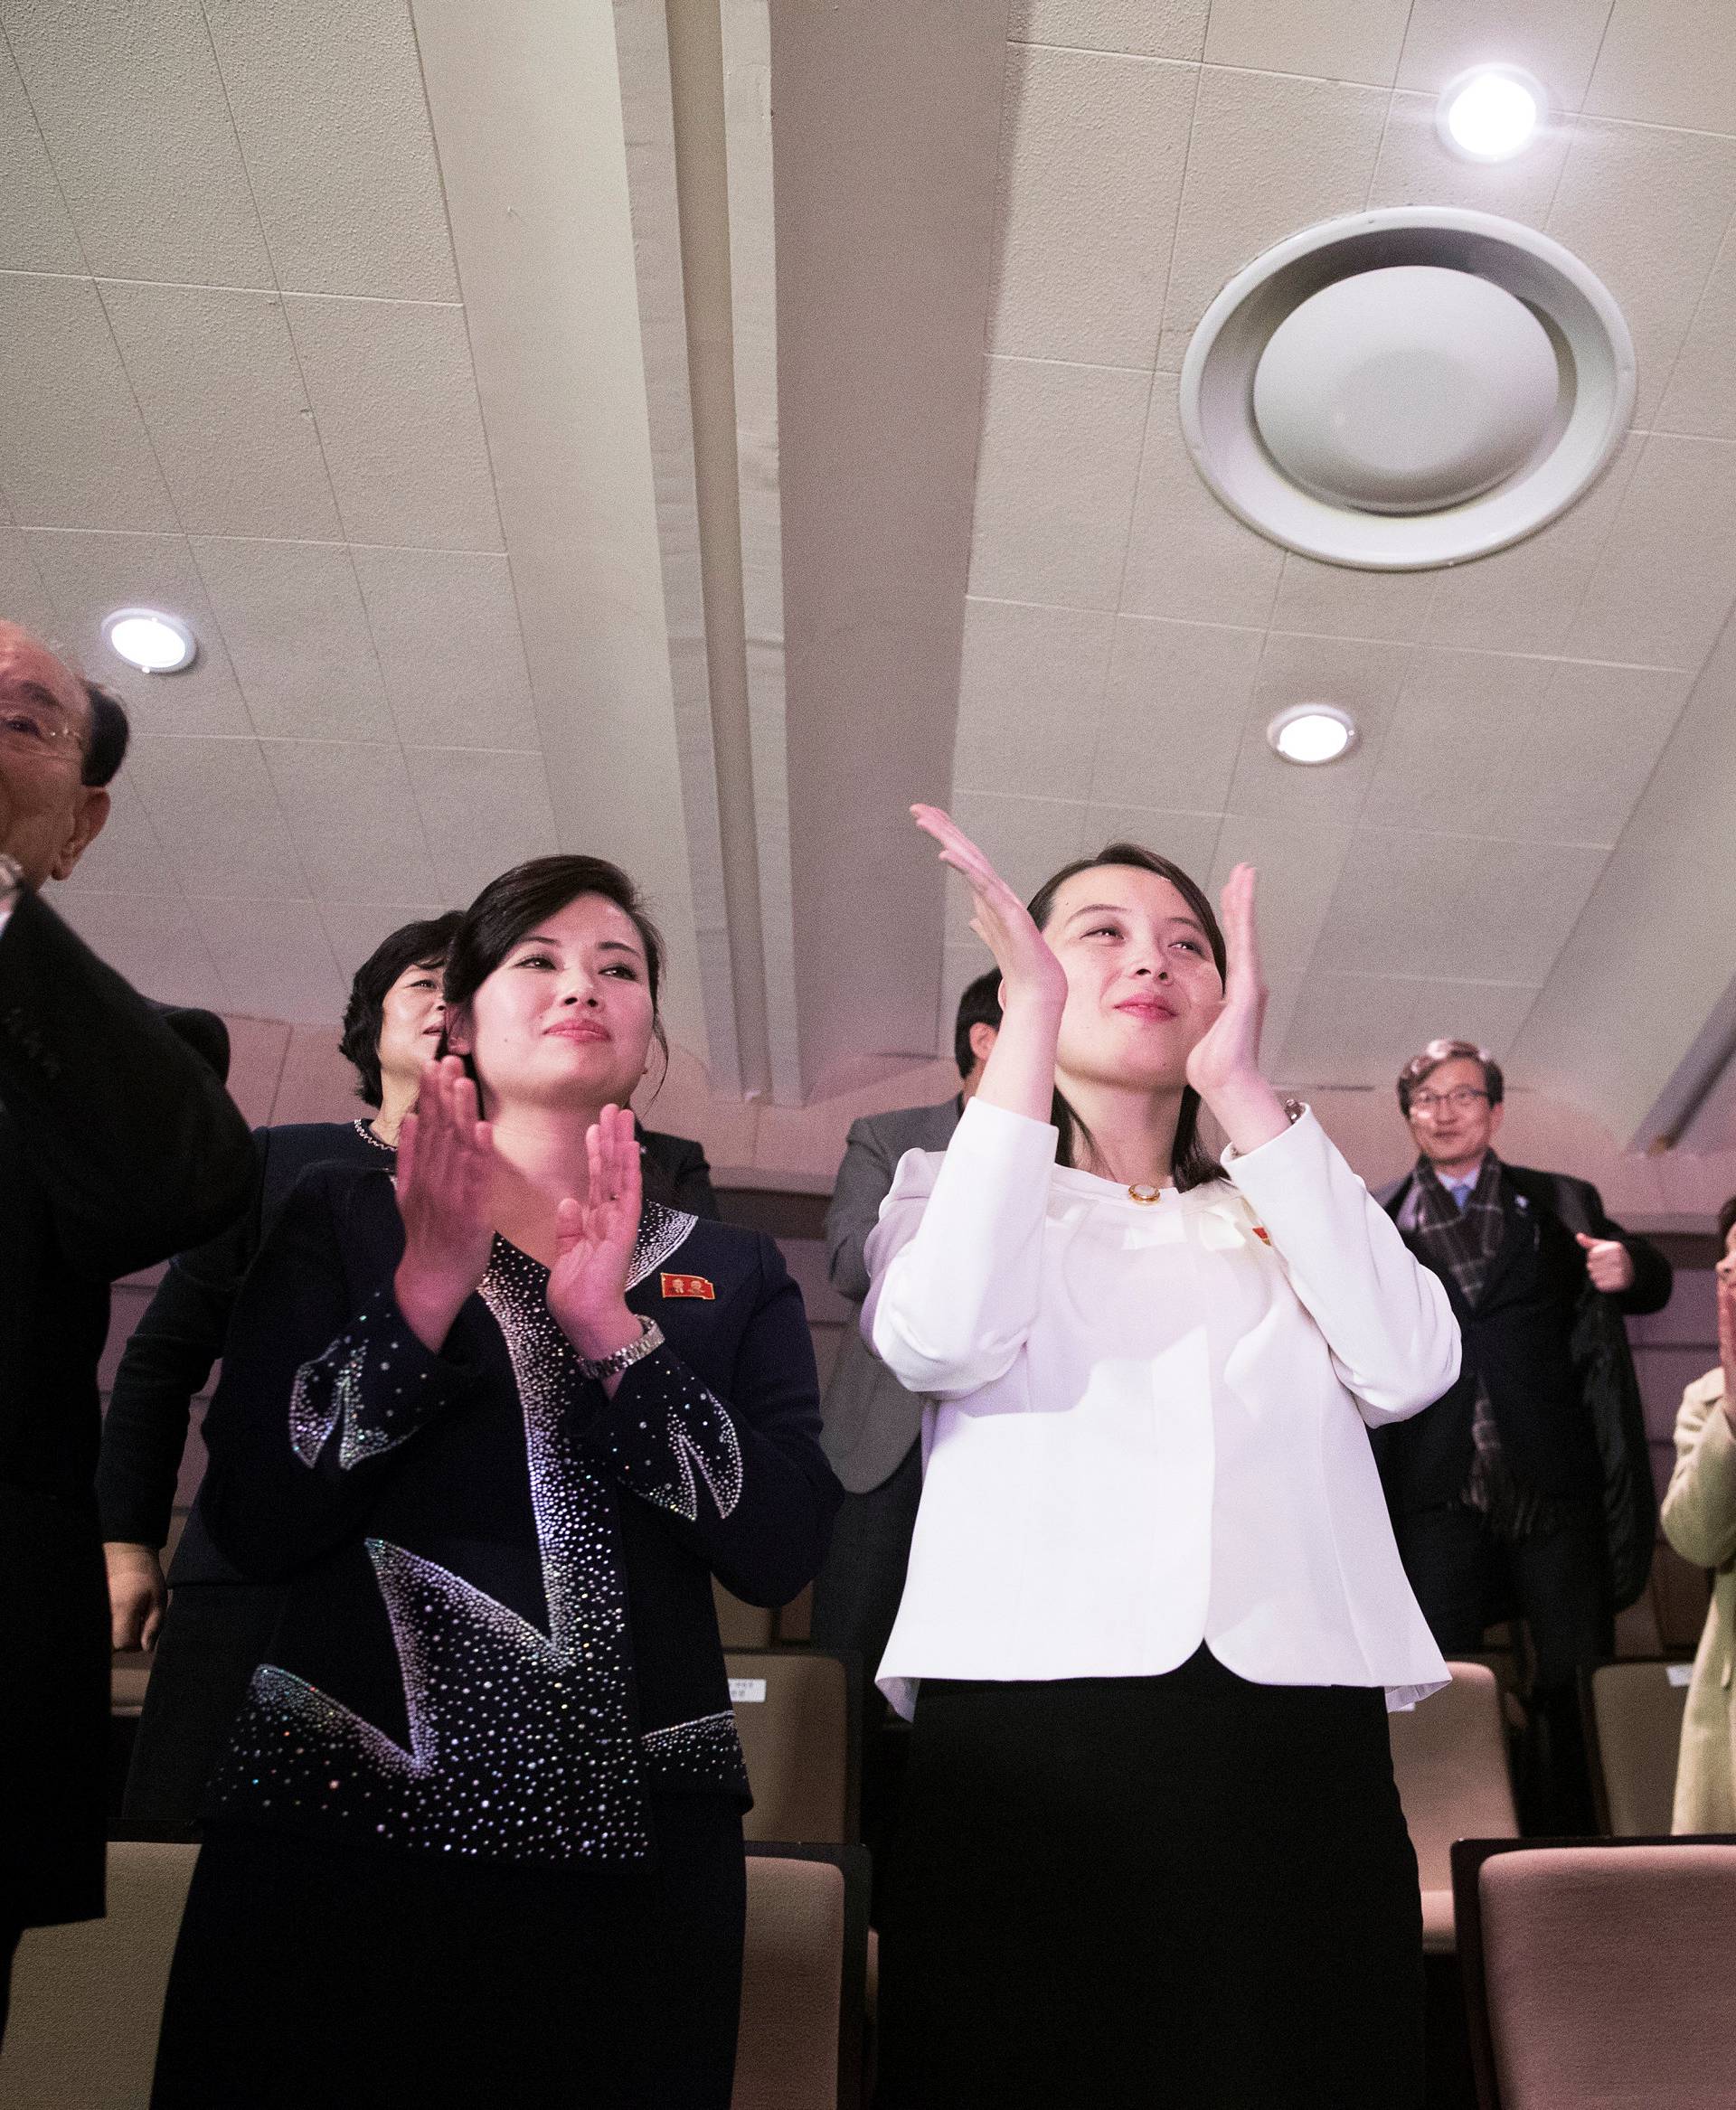 South Korean President Moon Jae-in and Kim Yo Jong, the sister of North Korea's leader Kim Jong Un, applaud after watching North Korea's Samjiyon Orchestra's performance in Seoul